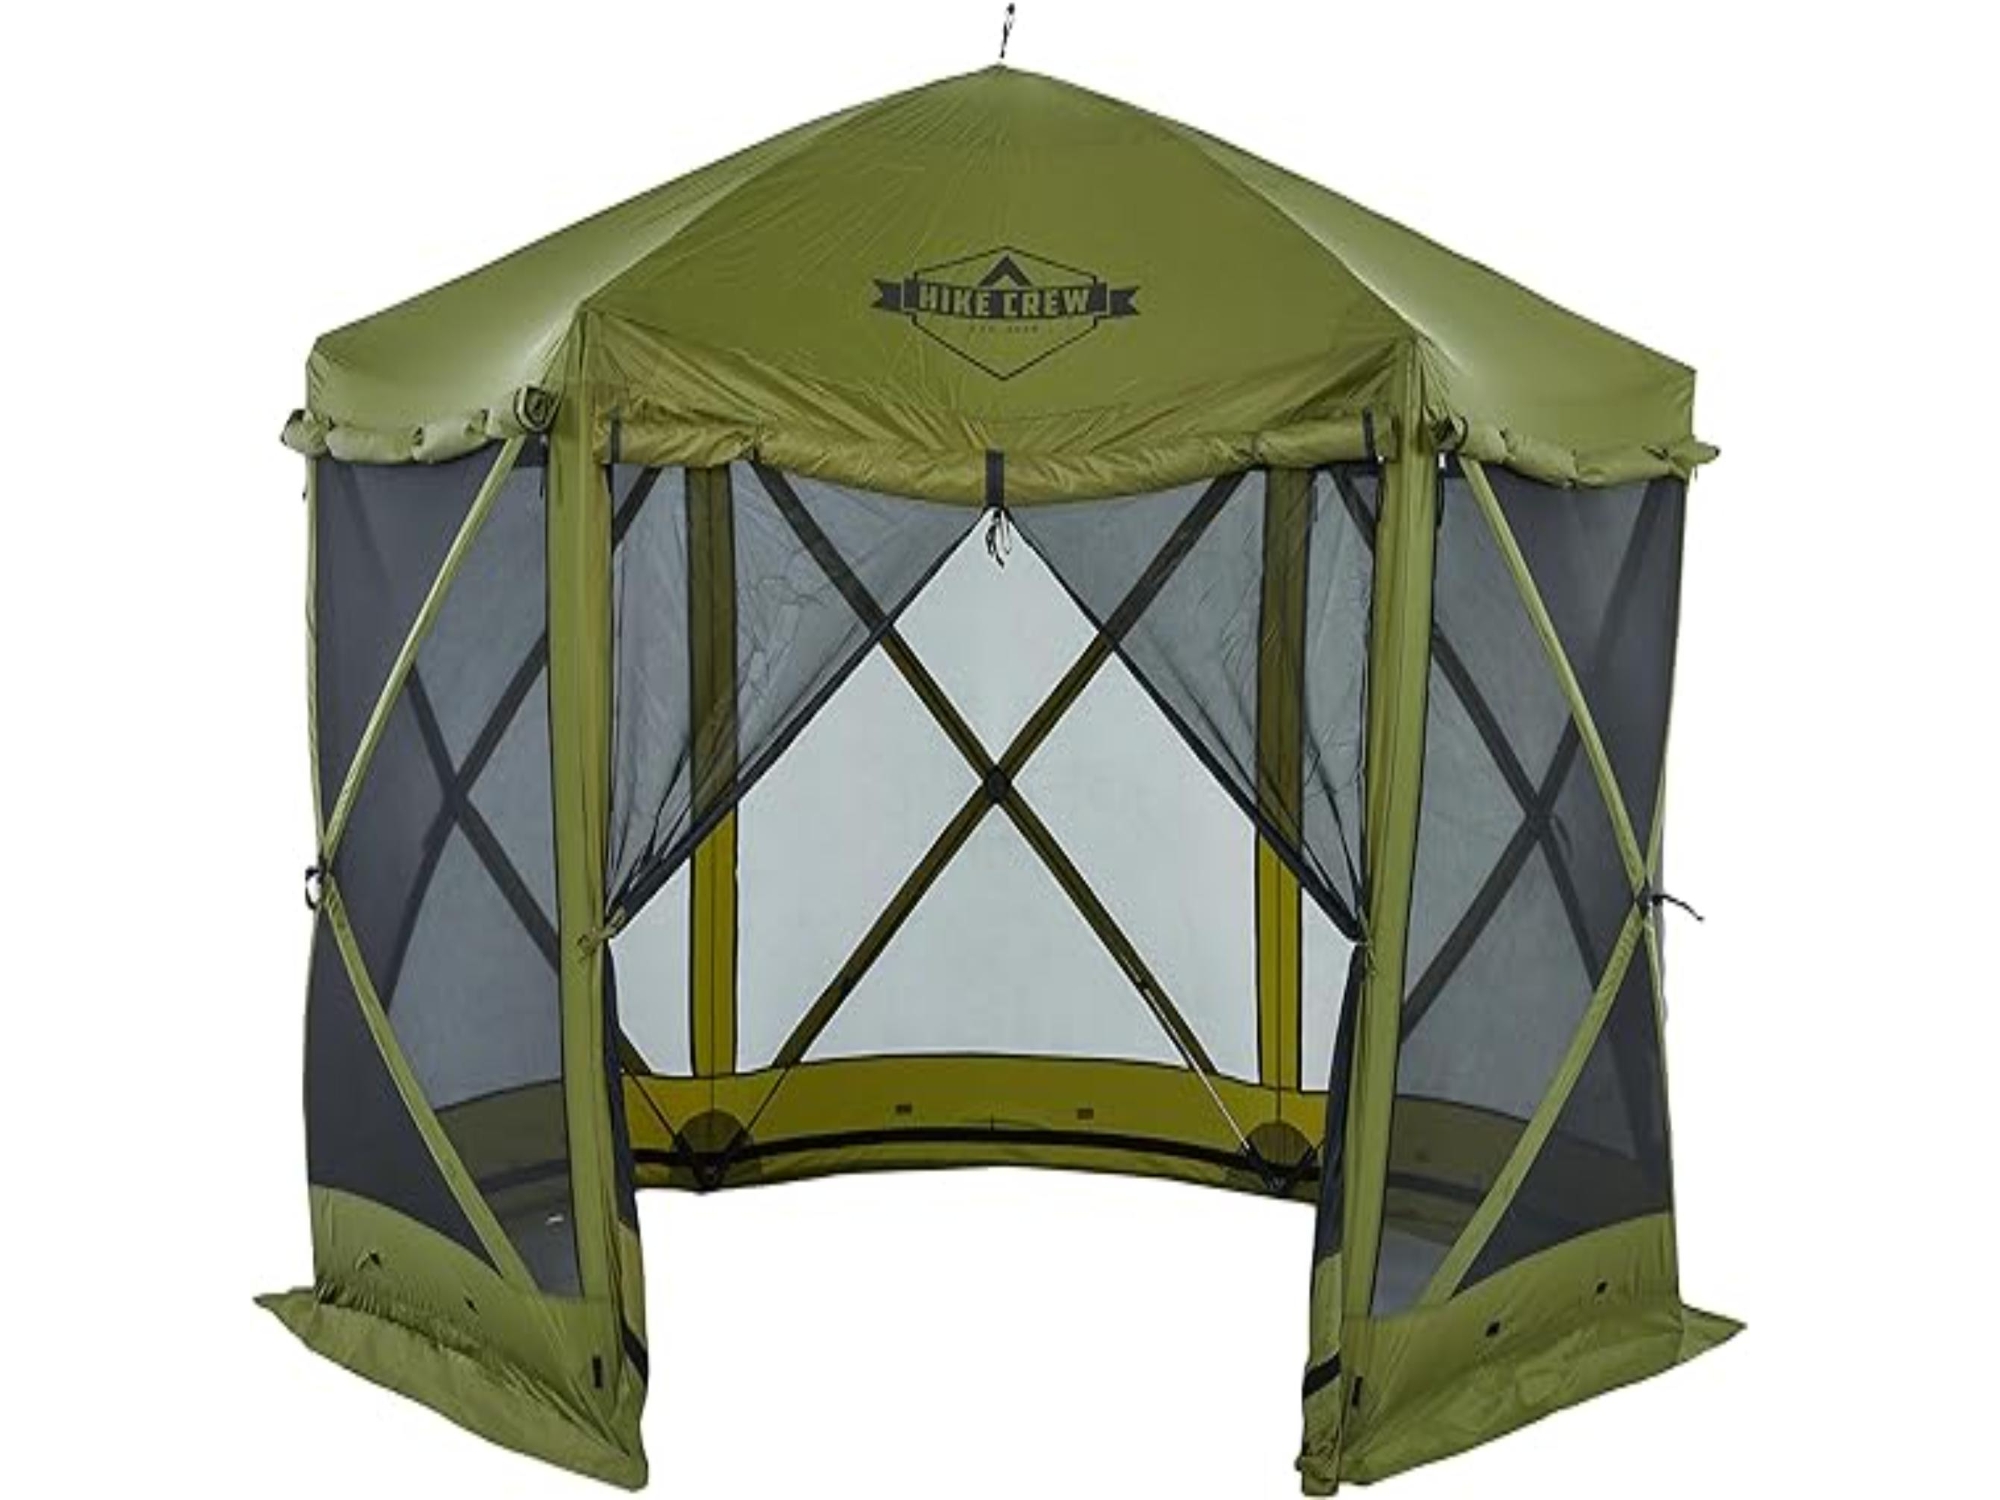 Hike Crew 12x12 Pop Up Gazebo, Outdoor Tent Canopy w/Wind Panels, Green